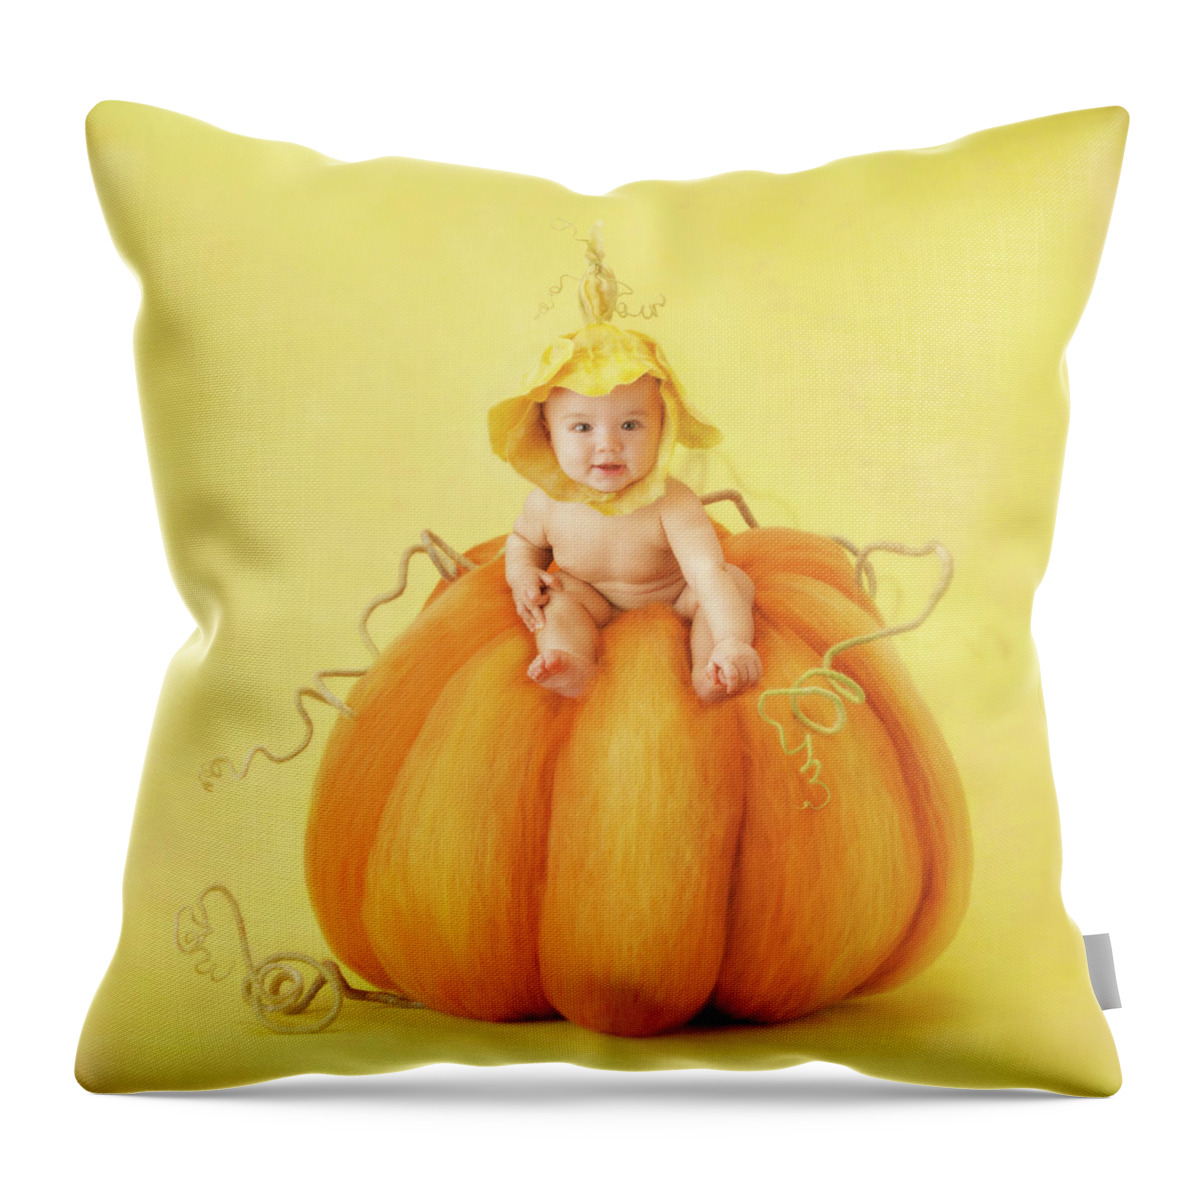 Fall Throw Pillow featuring the photograph Soft Fall Pumpkin by Anne Geddes